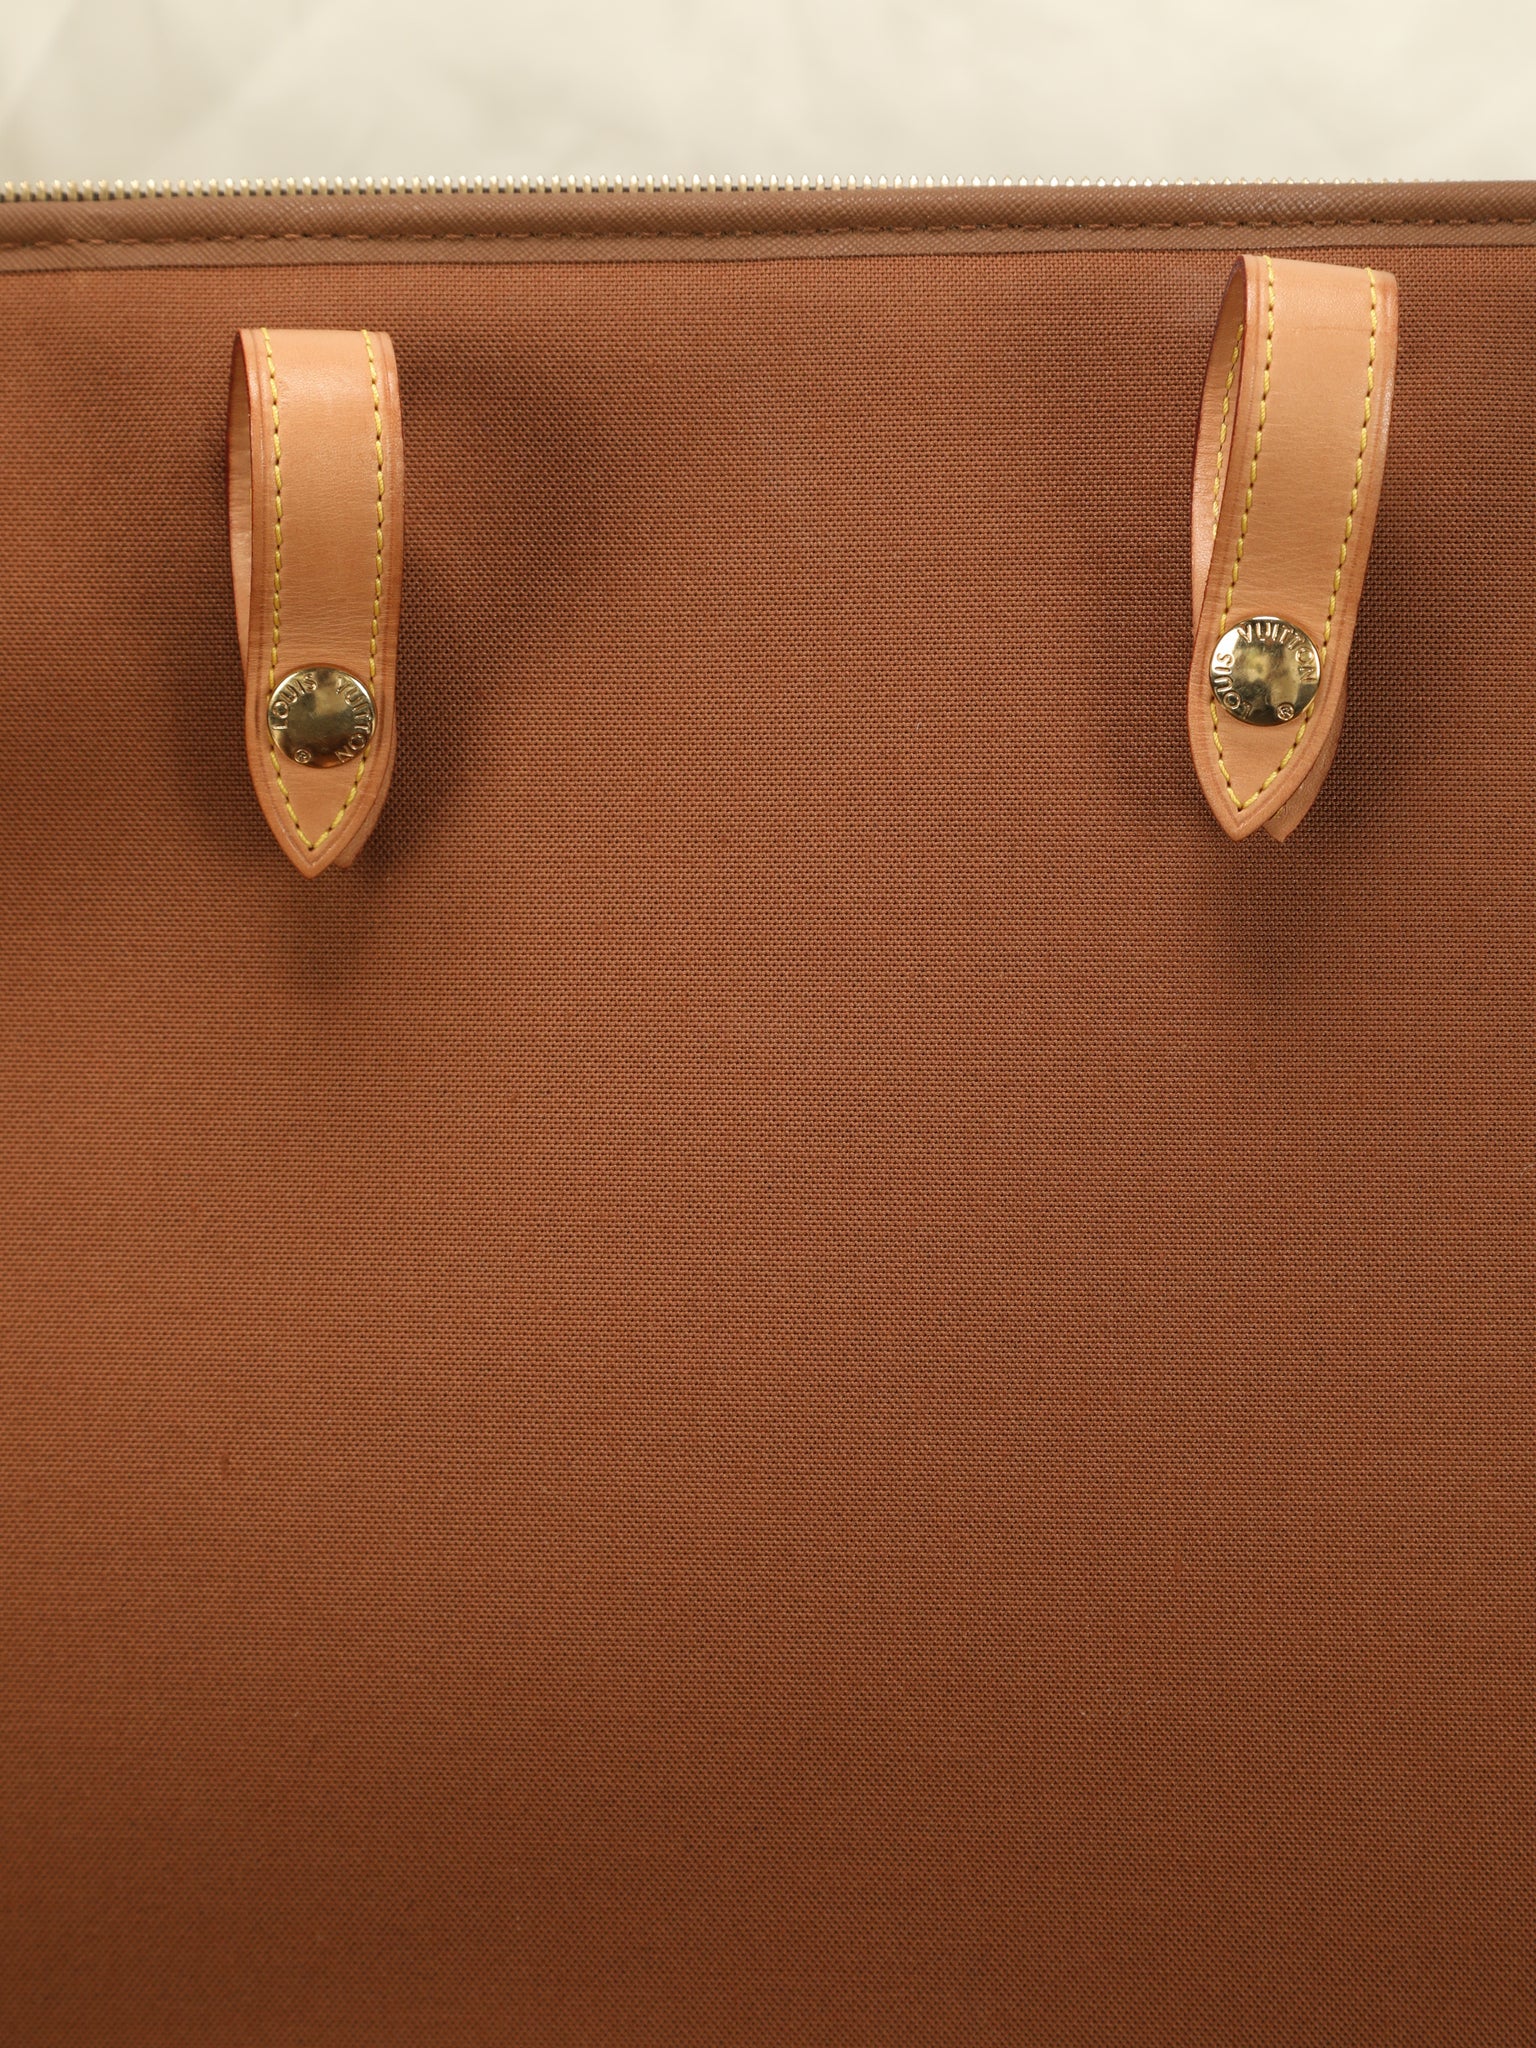 Louis Vuitton Pégase 50 Suitcase (Authentic Pre-Owned) Leather Travel Bag  Pegase